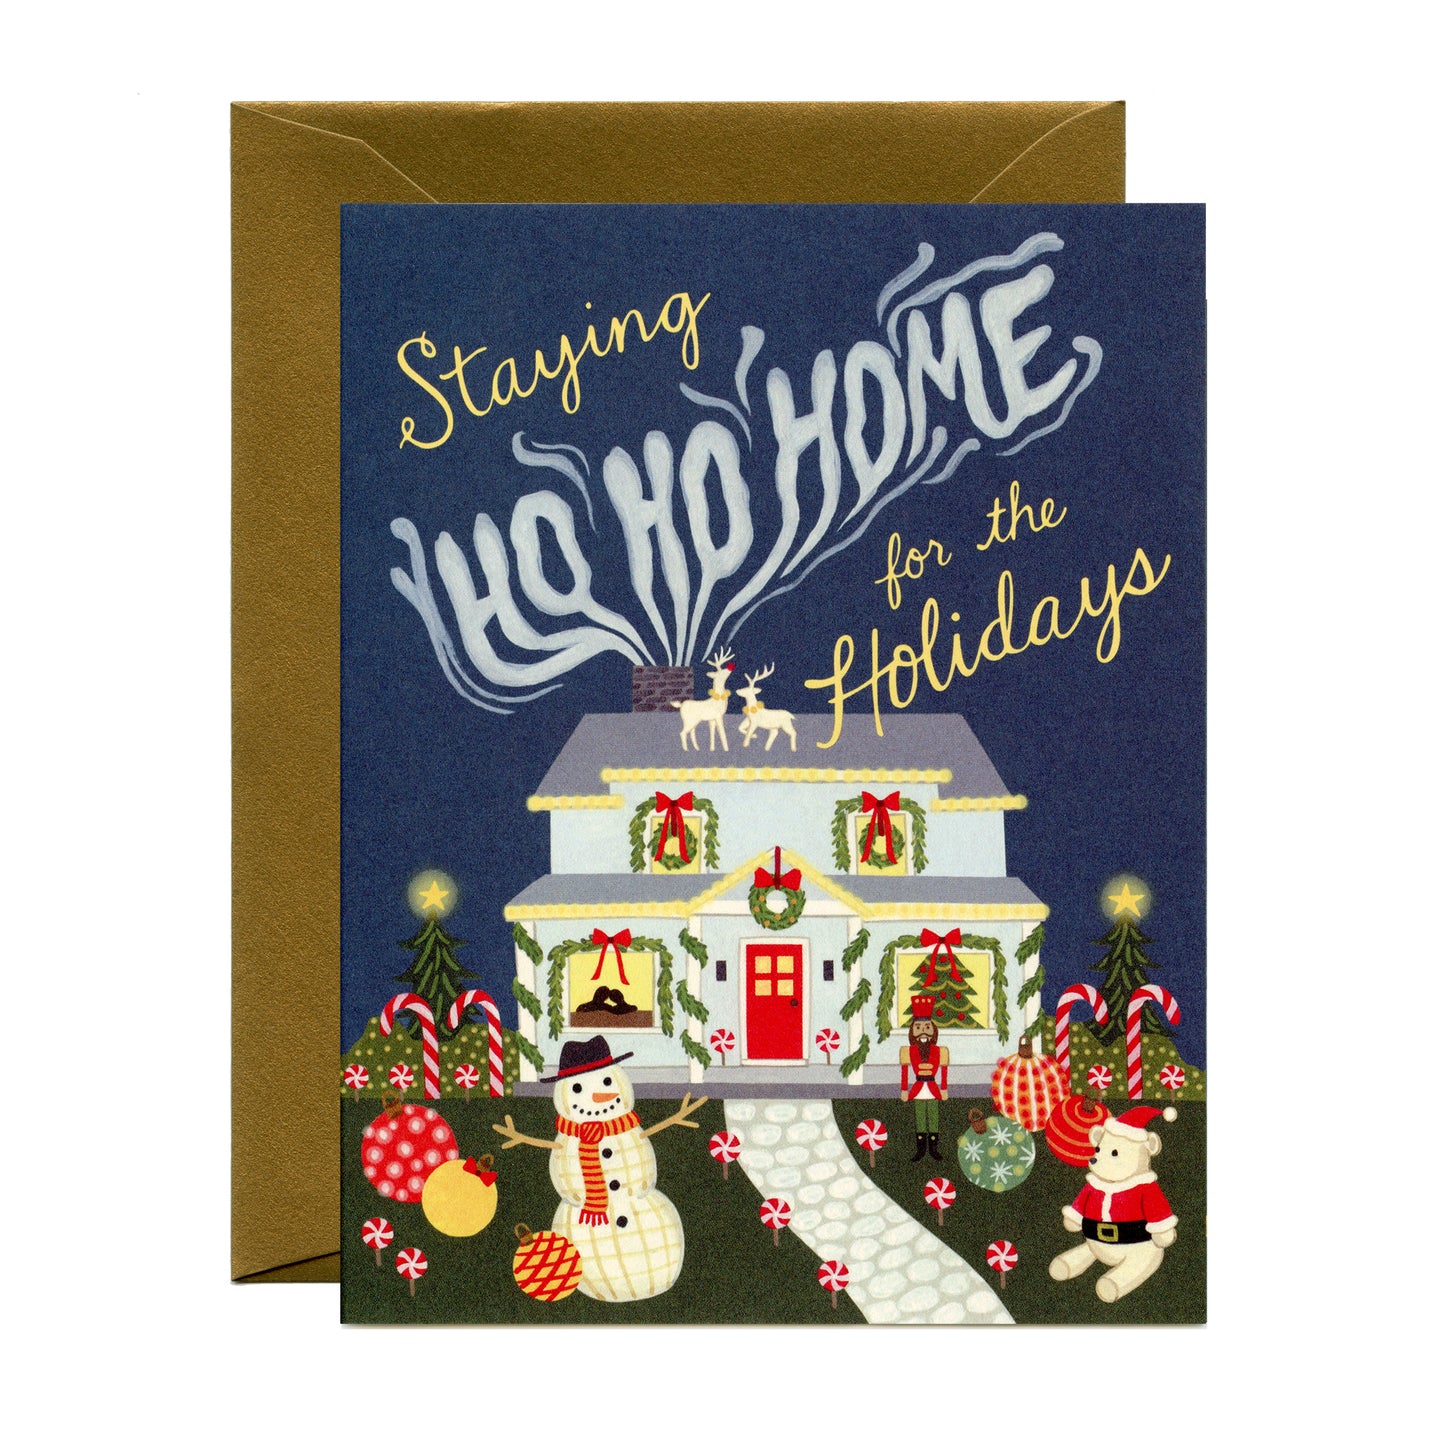 HO HO HOME - HOLIDAY GREETING CARD